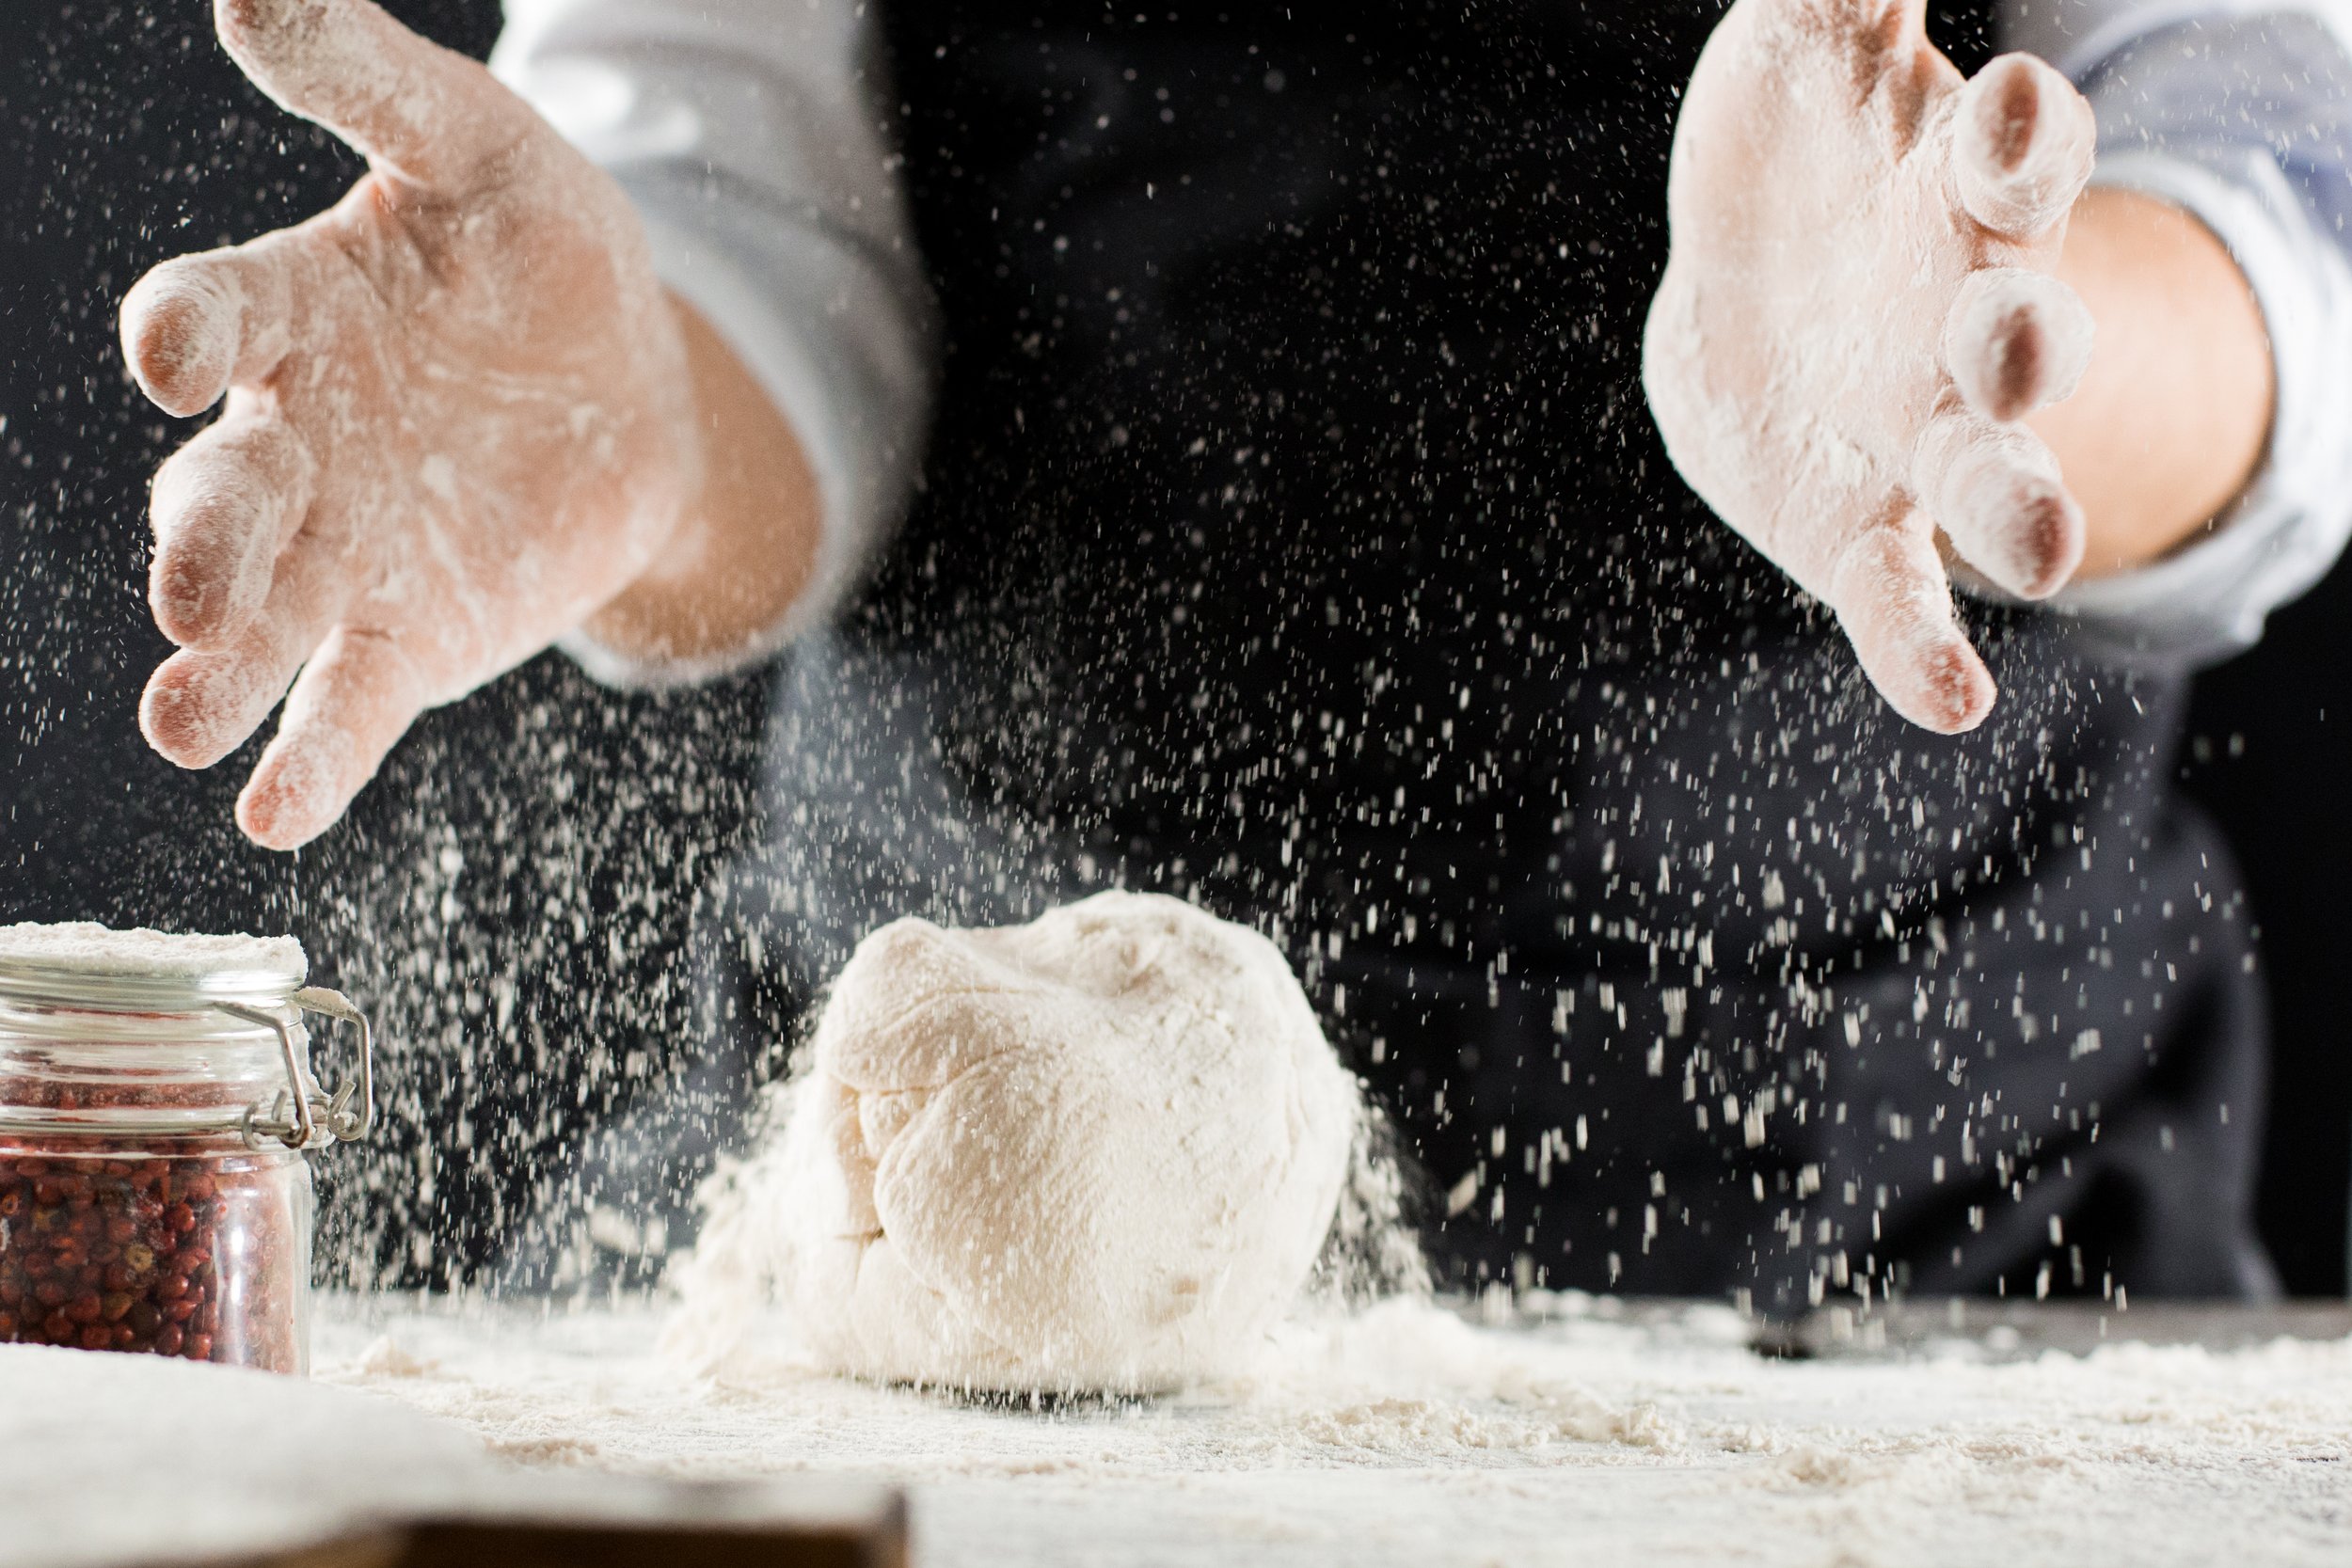 cook-kneads-dough-with-flour-on-kitchen-table-2021-10-21-02-26-06-utc.JPG